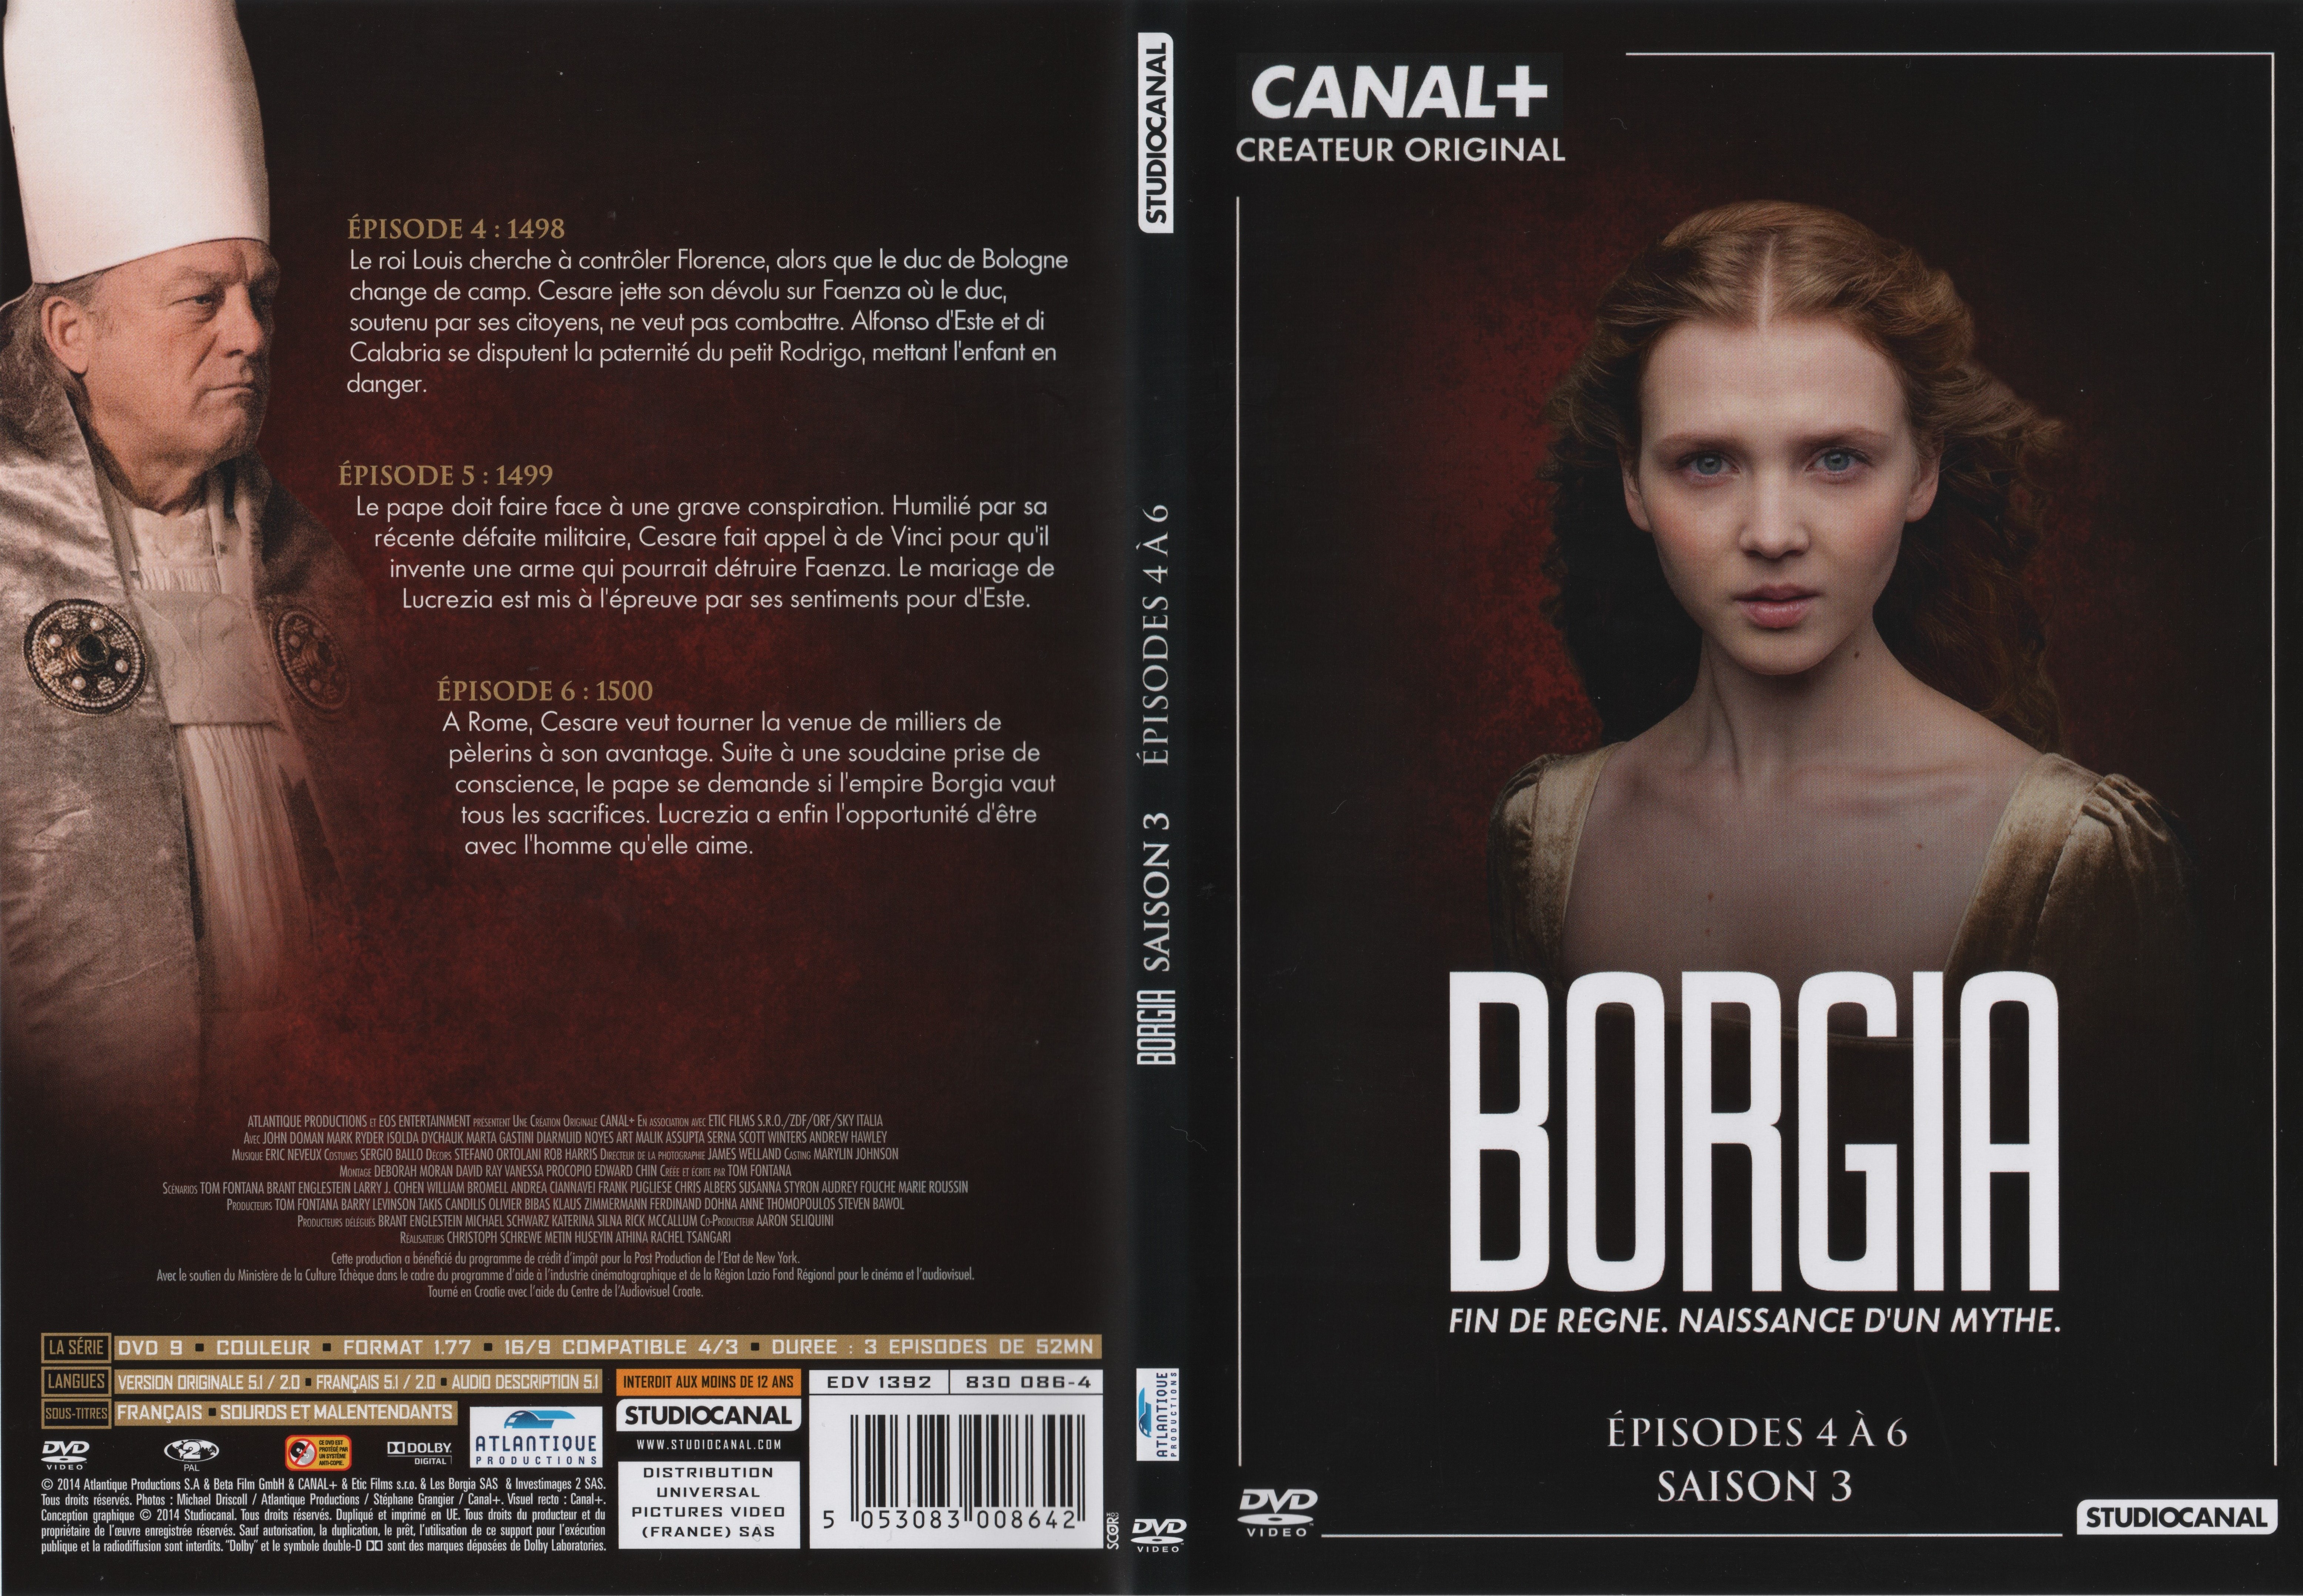 Jaquette DVD Borgia Saison 3 DVD 2